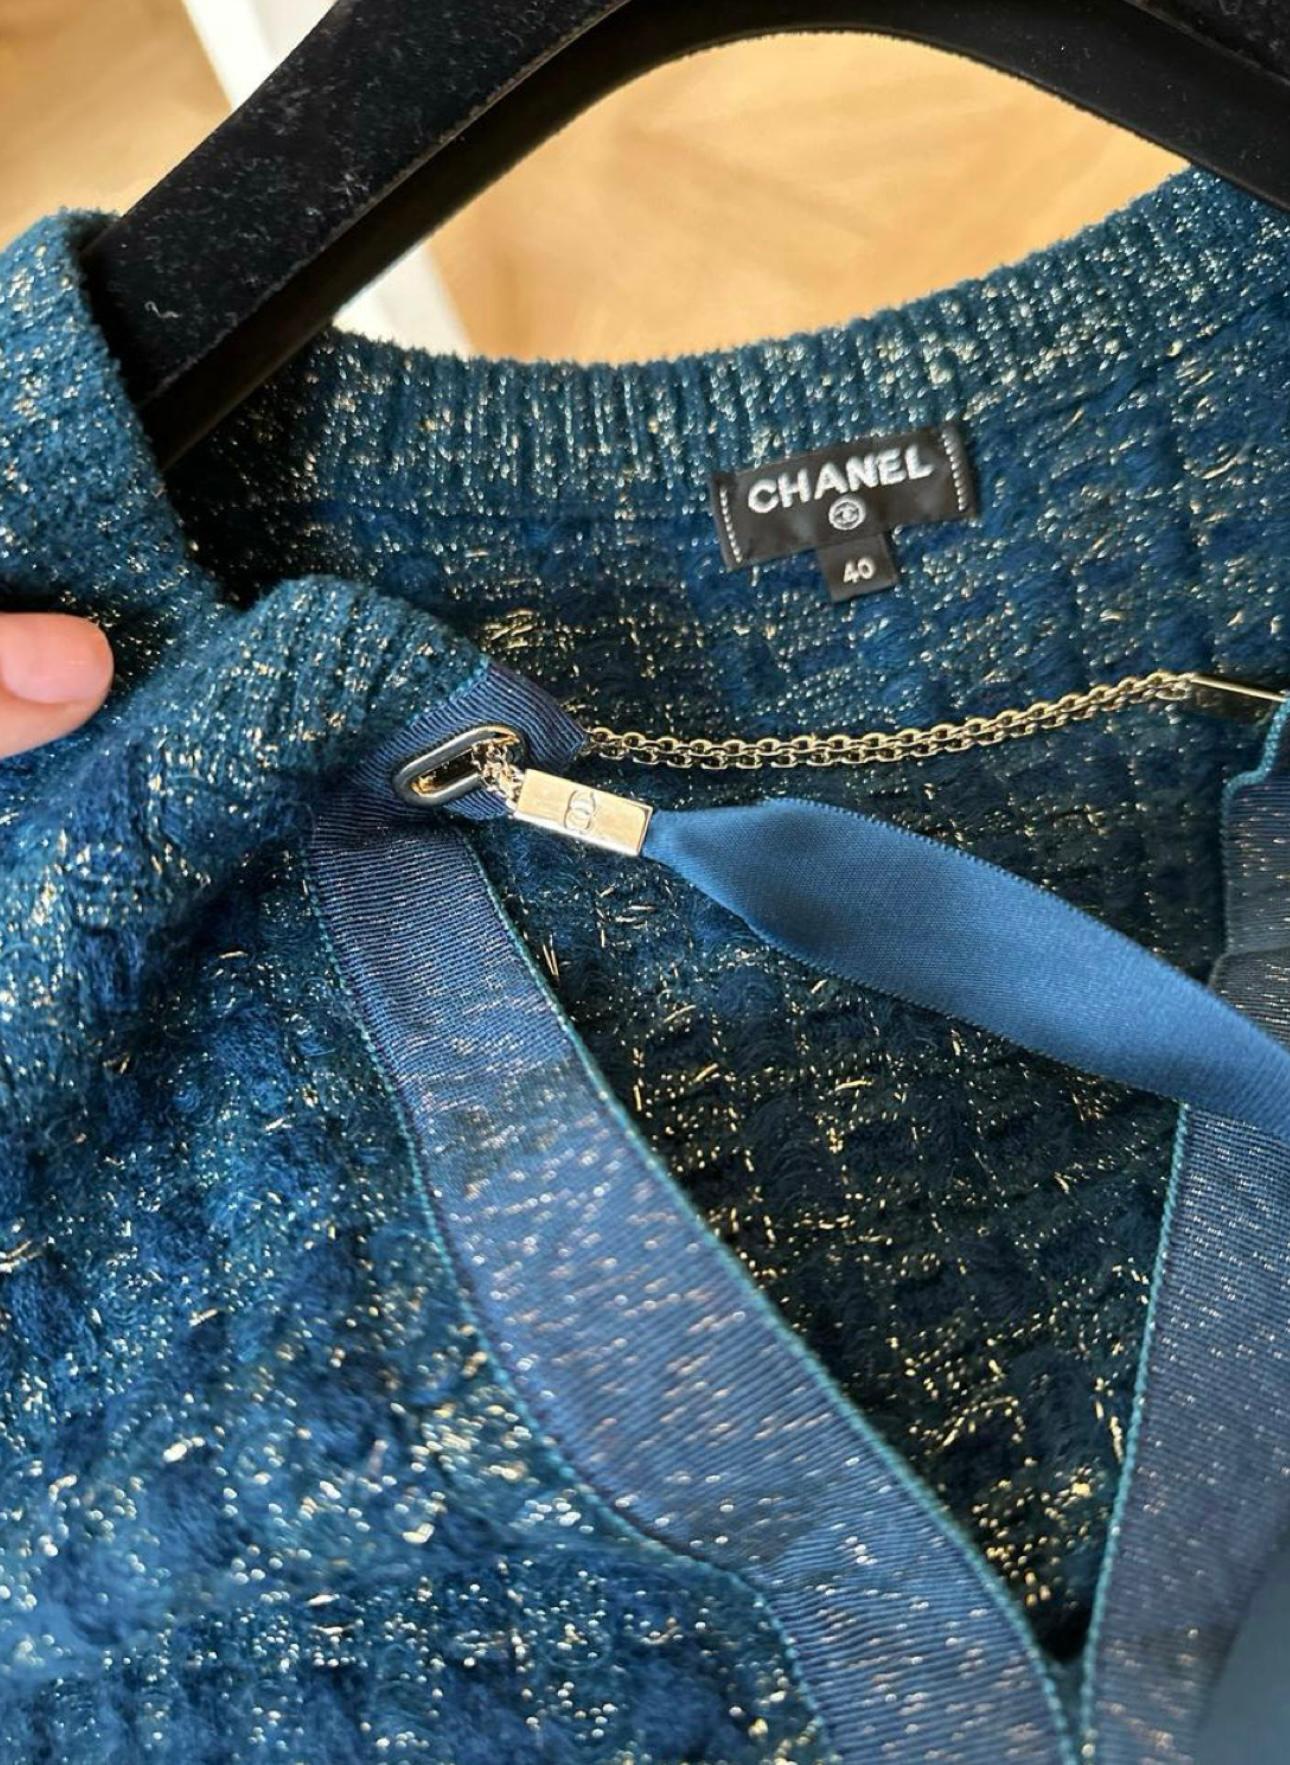 Chanel Paris / Cosmopolite Shimmering Lounge Suit For Sale 1